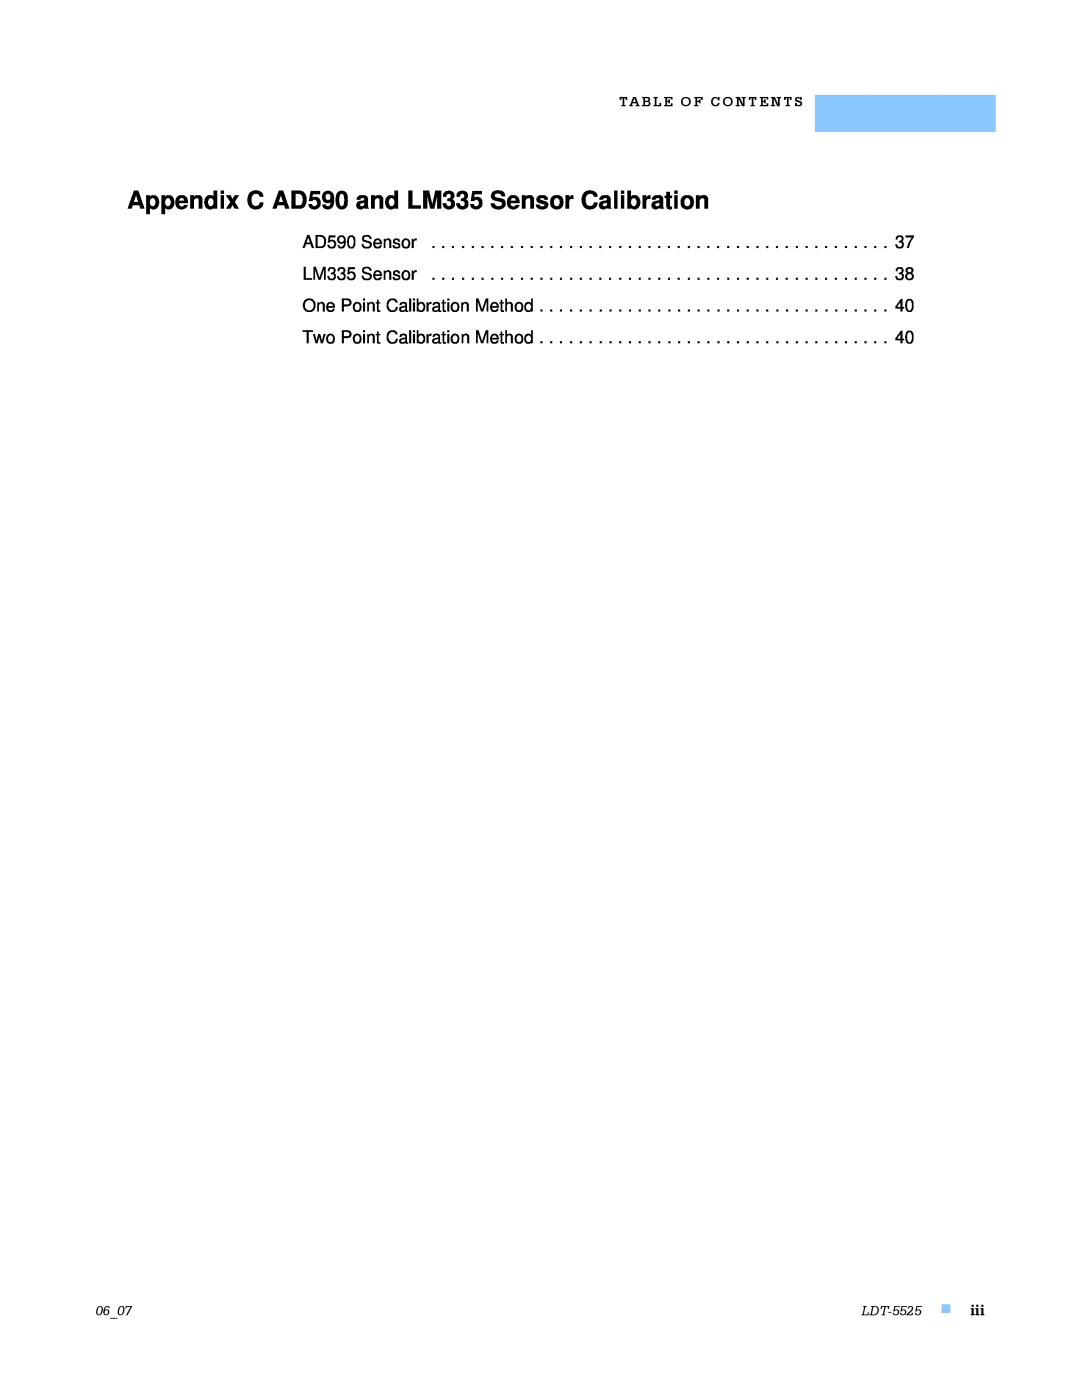 Lightwave Communications LDT-5525 manual Appendix C AD590 and LM335 Sensor Calibration, Two Point Calibration Method, 0607 